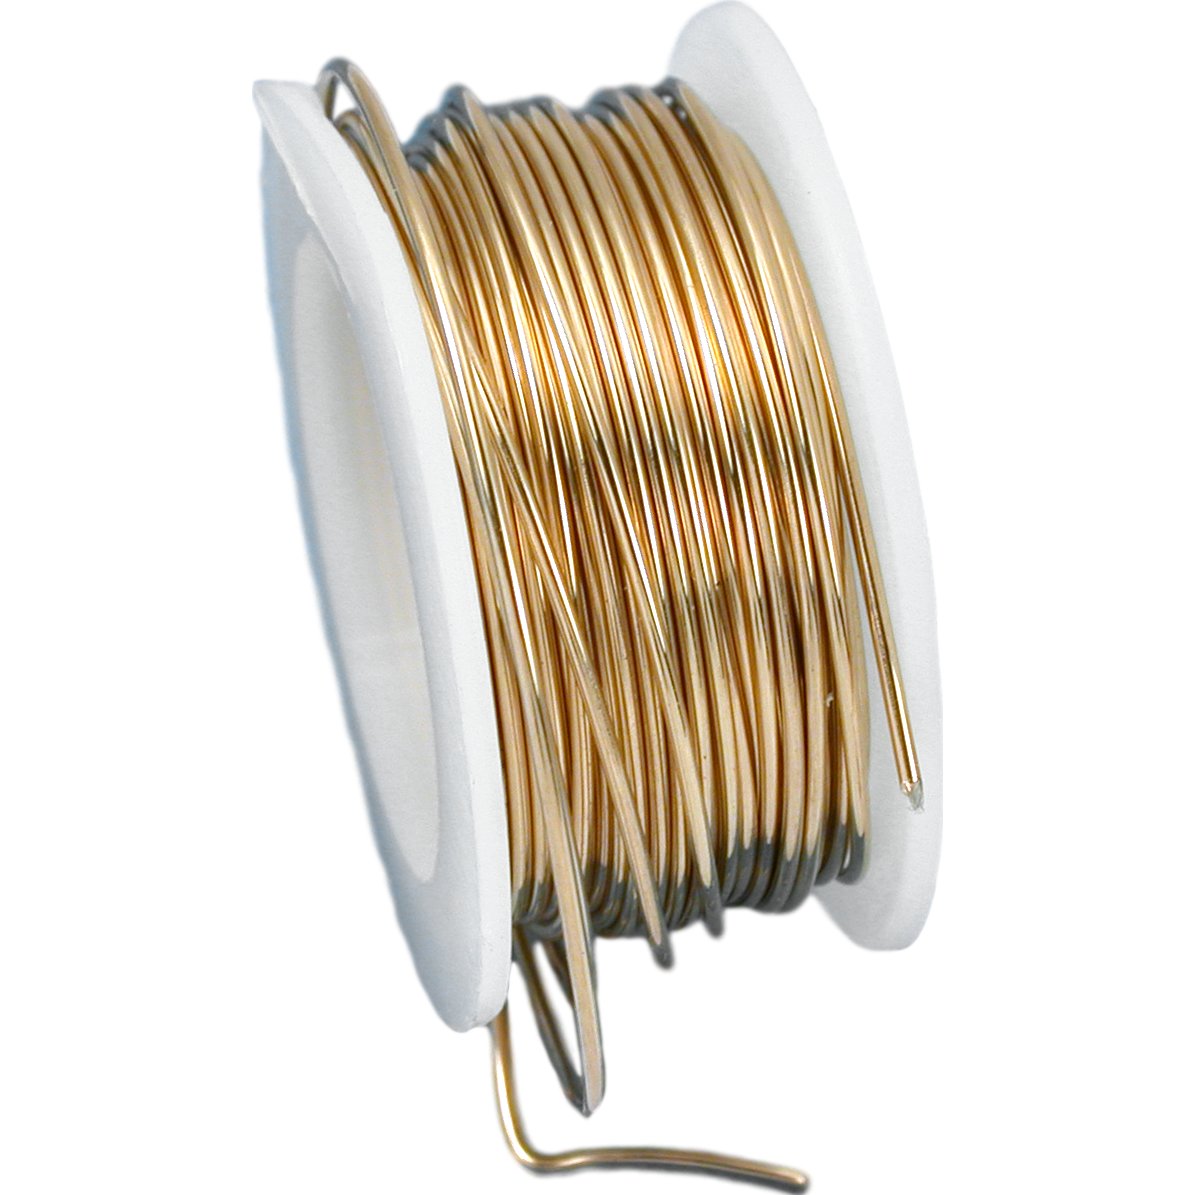 Artistic Wire Spool Gold Color 20 Gauge 5.4M